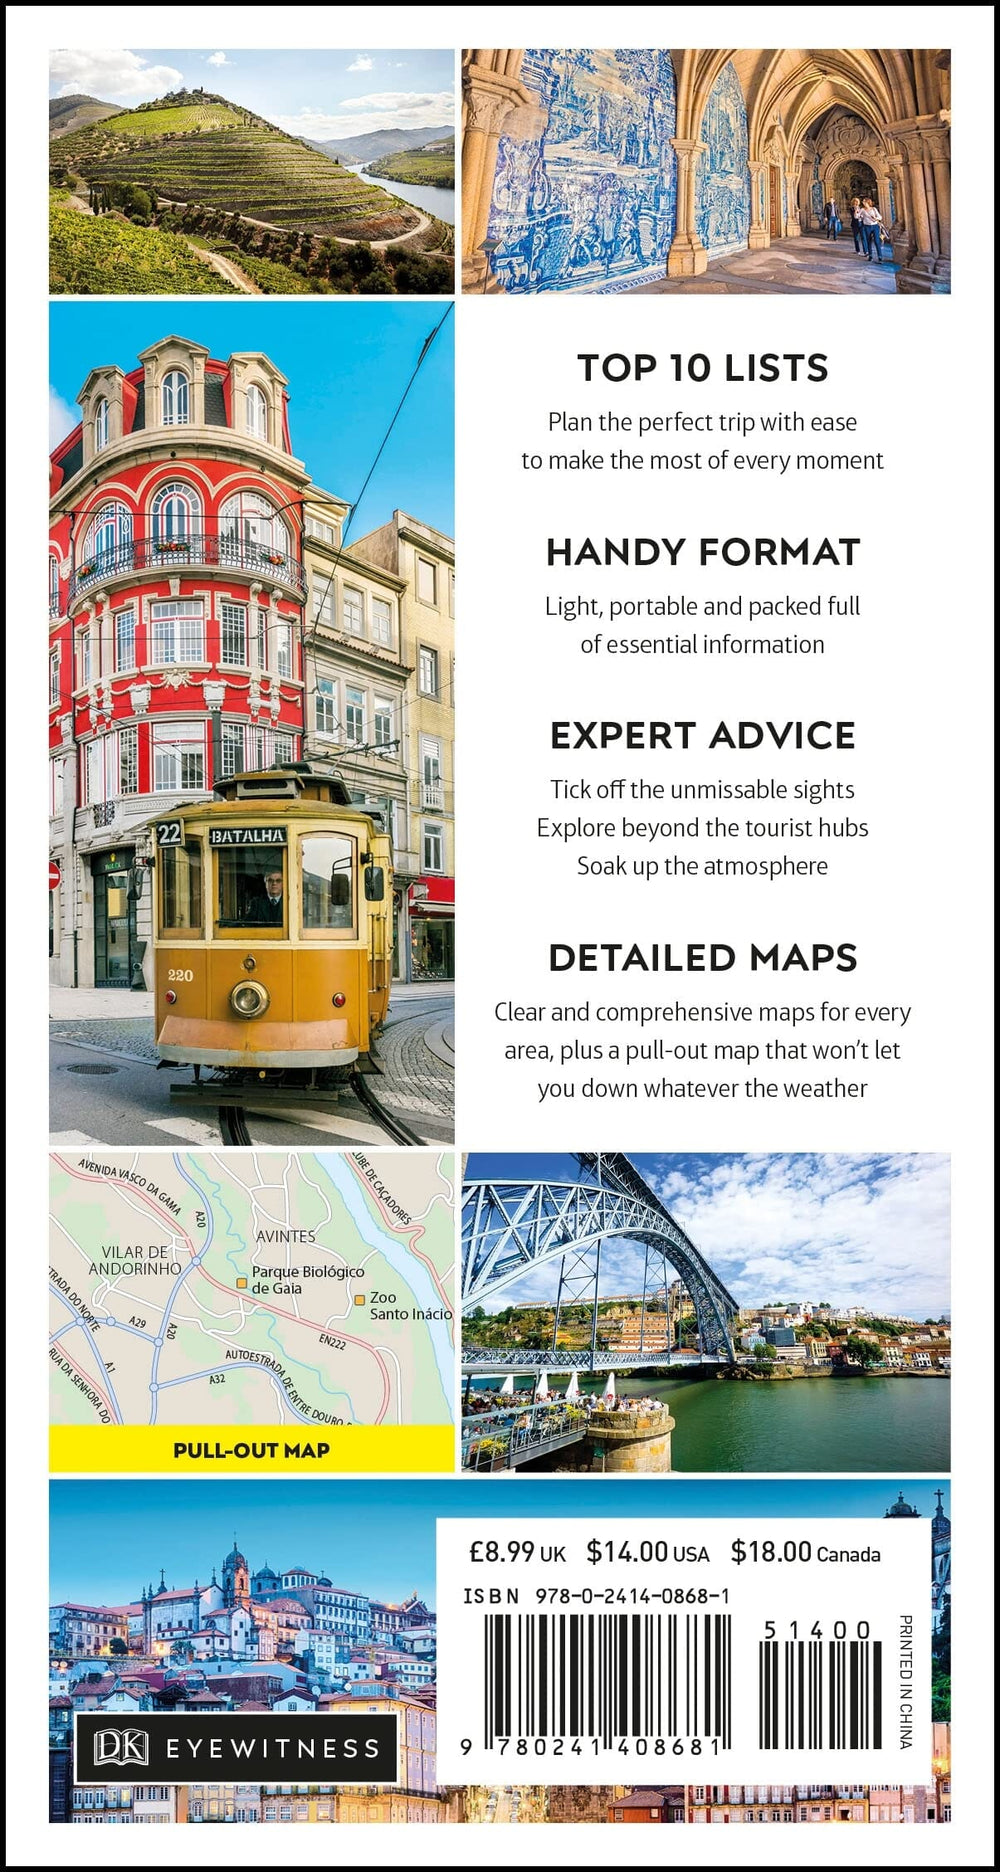 Guide de voyage (en anglais) - Porto Top 10 | Eyewitness guide petit format Eyewitness 